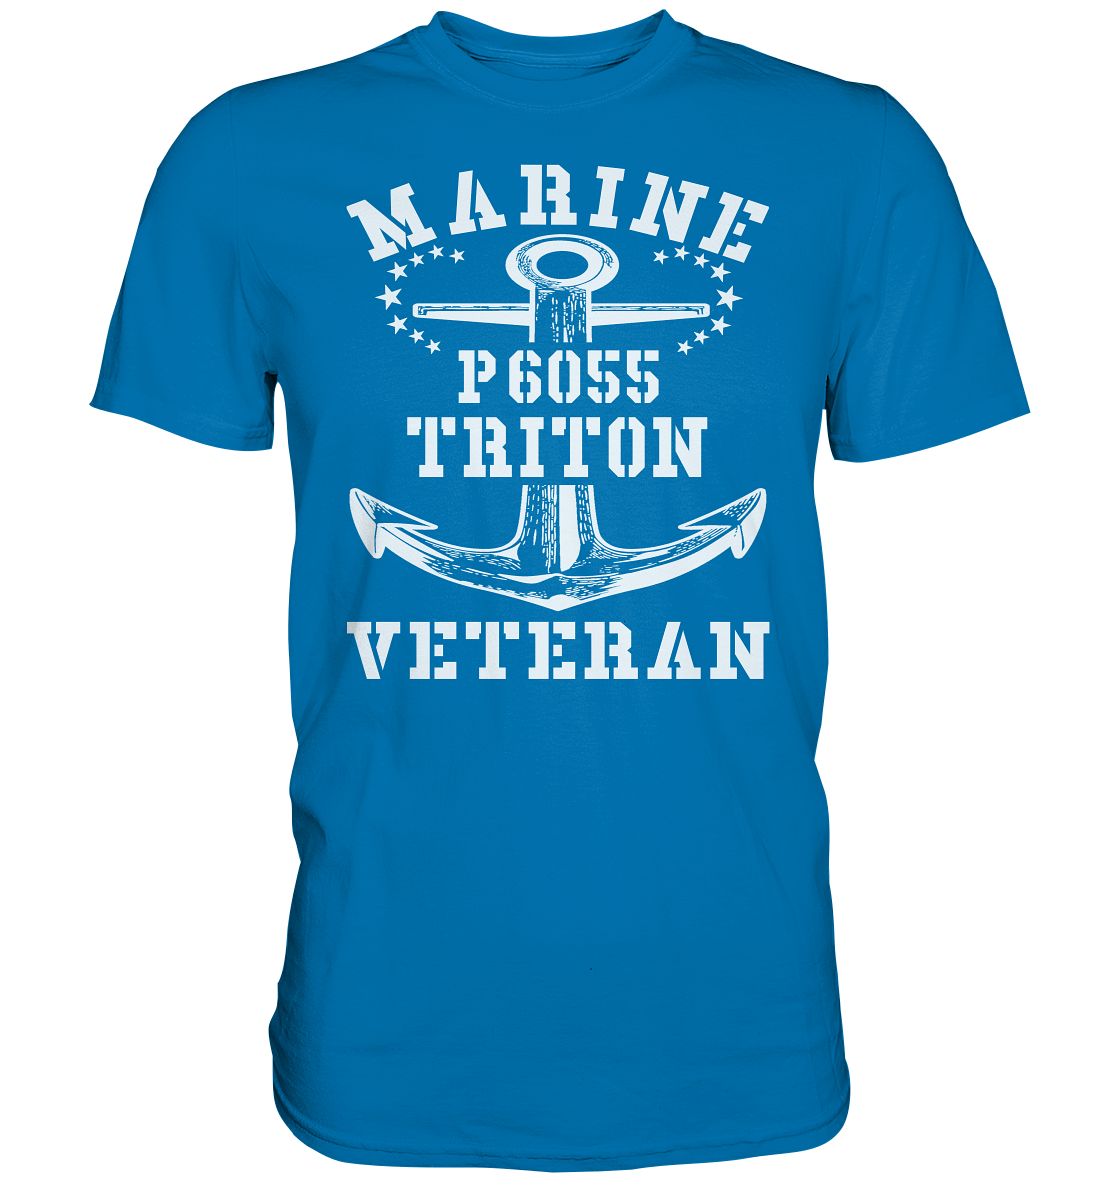 U-Jagdboot P6055 TRITON Marine Veteran - Premium Shirt